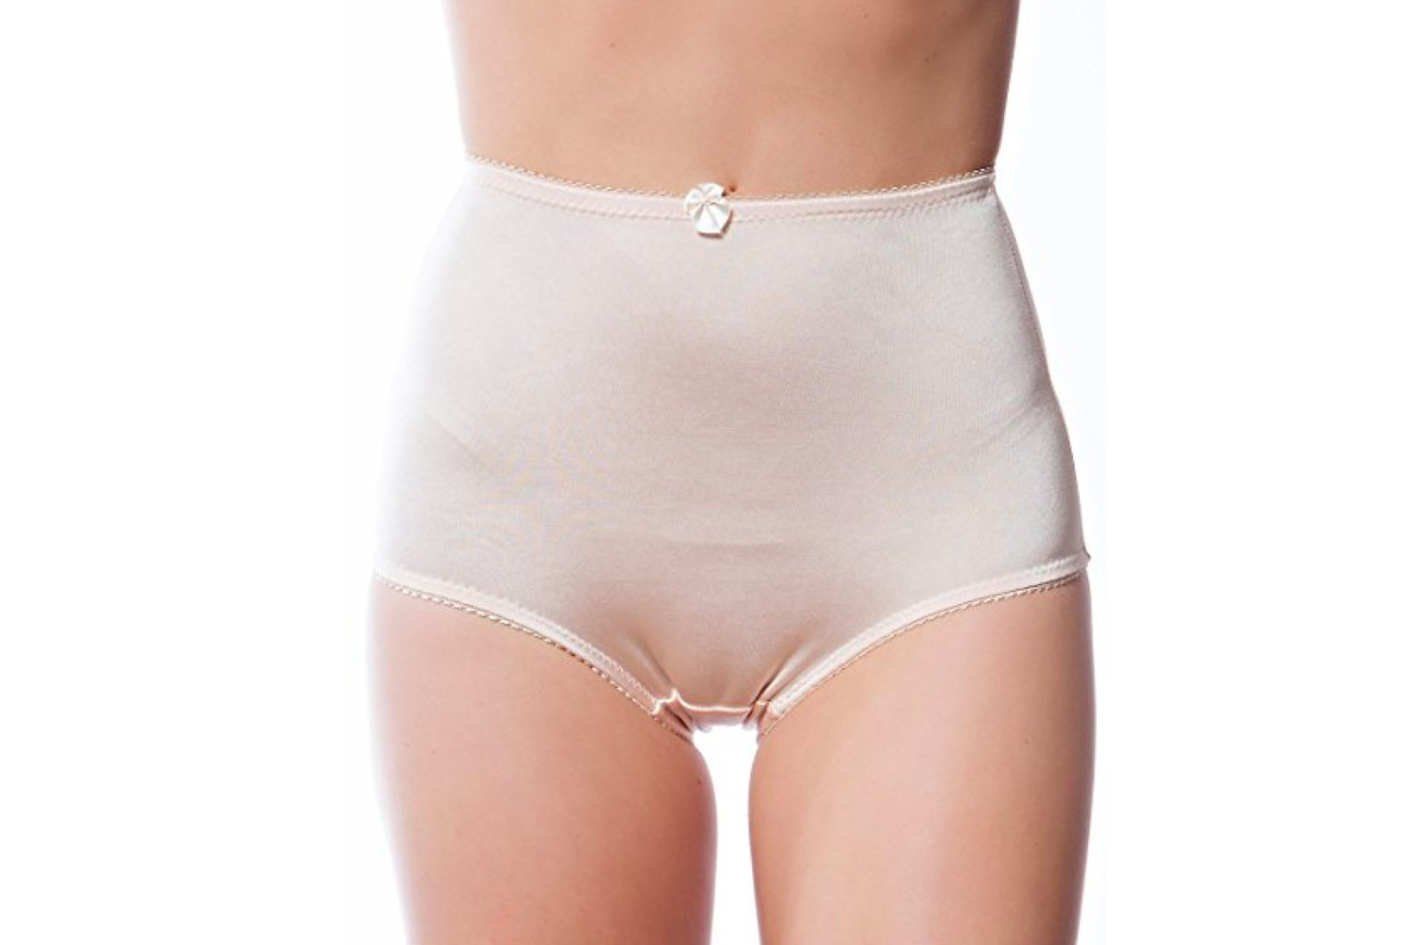 Alias recommend best of Mature white full cut nylon panties